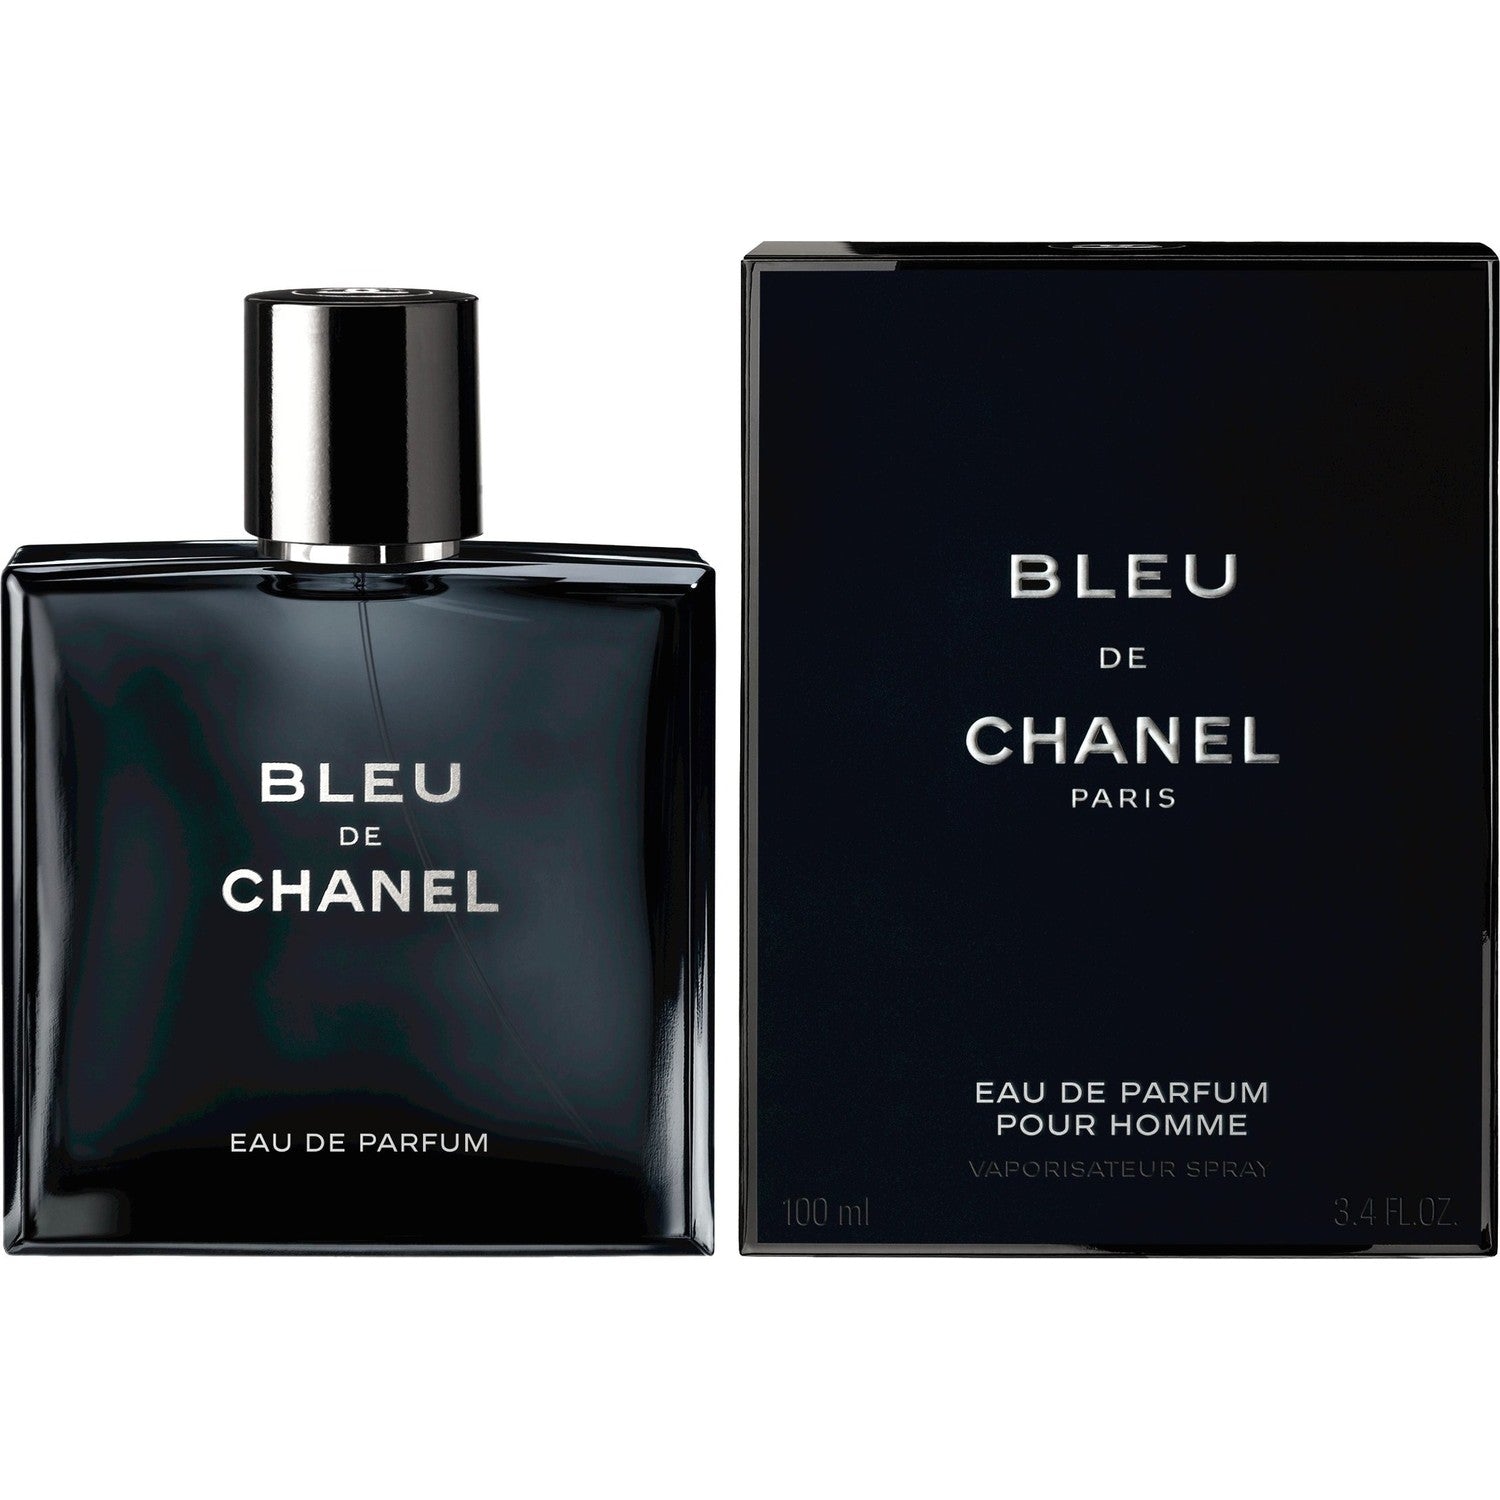 Chanel Bleu kokusu Esansı - FYZ-17389